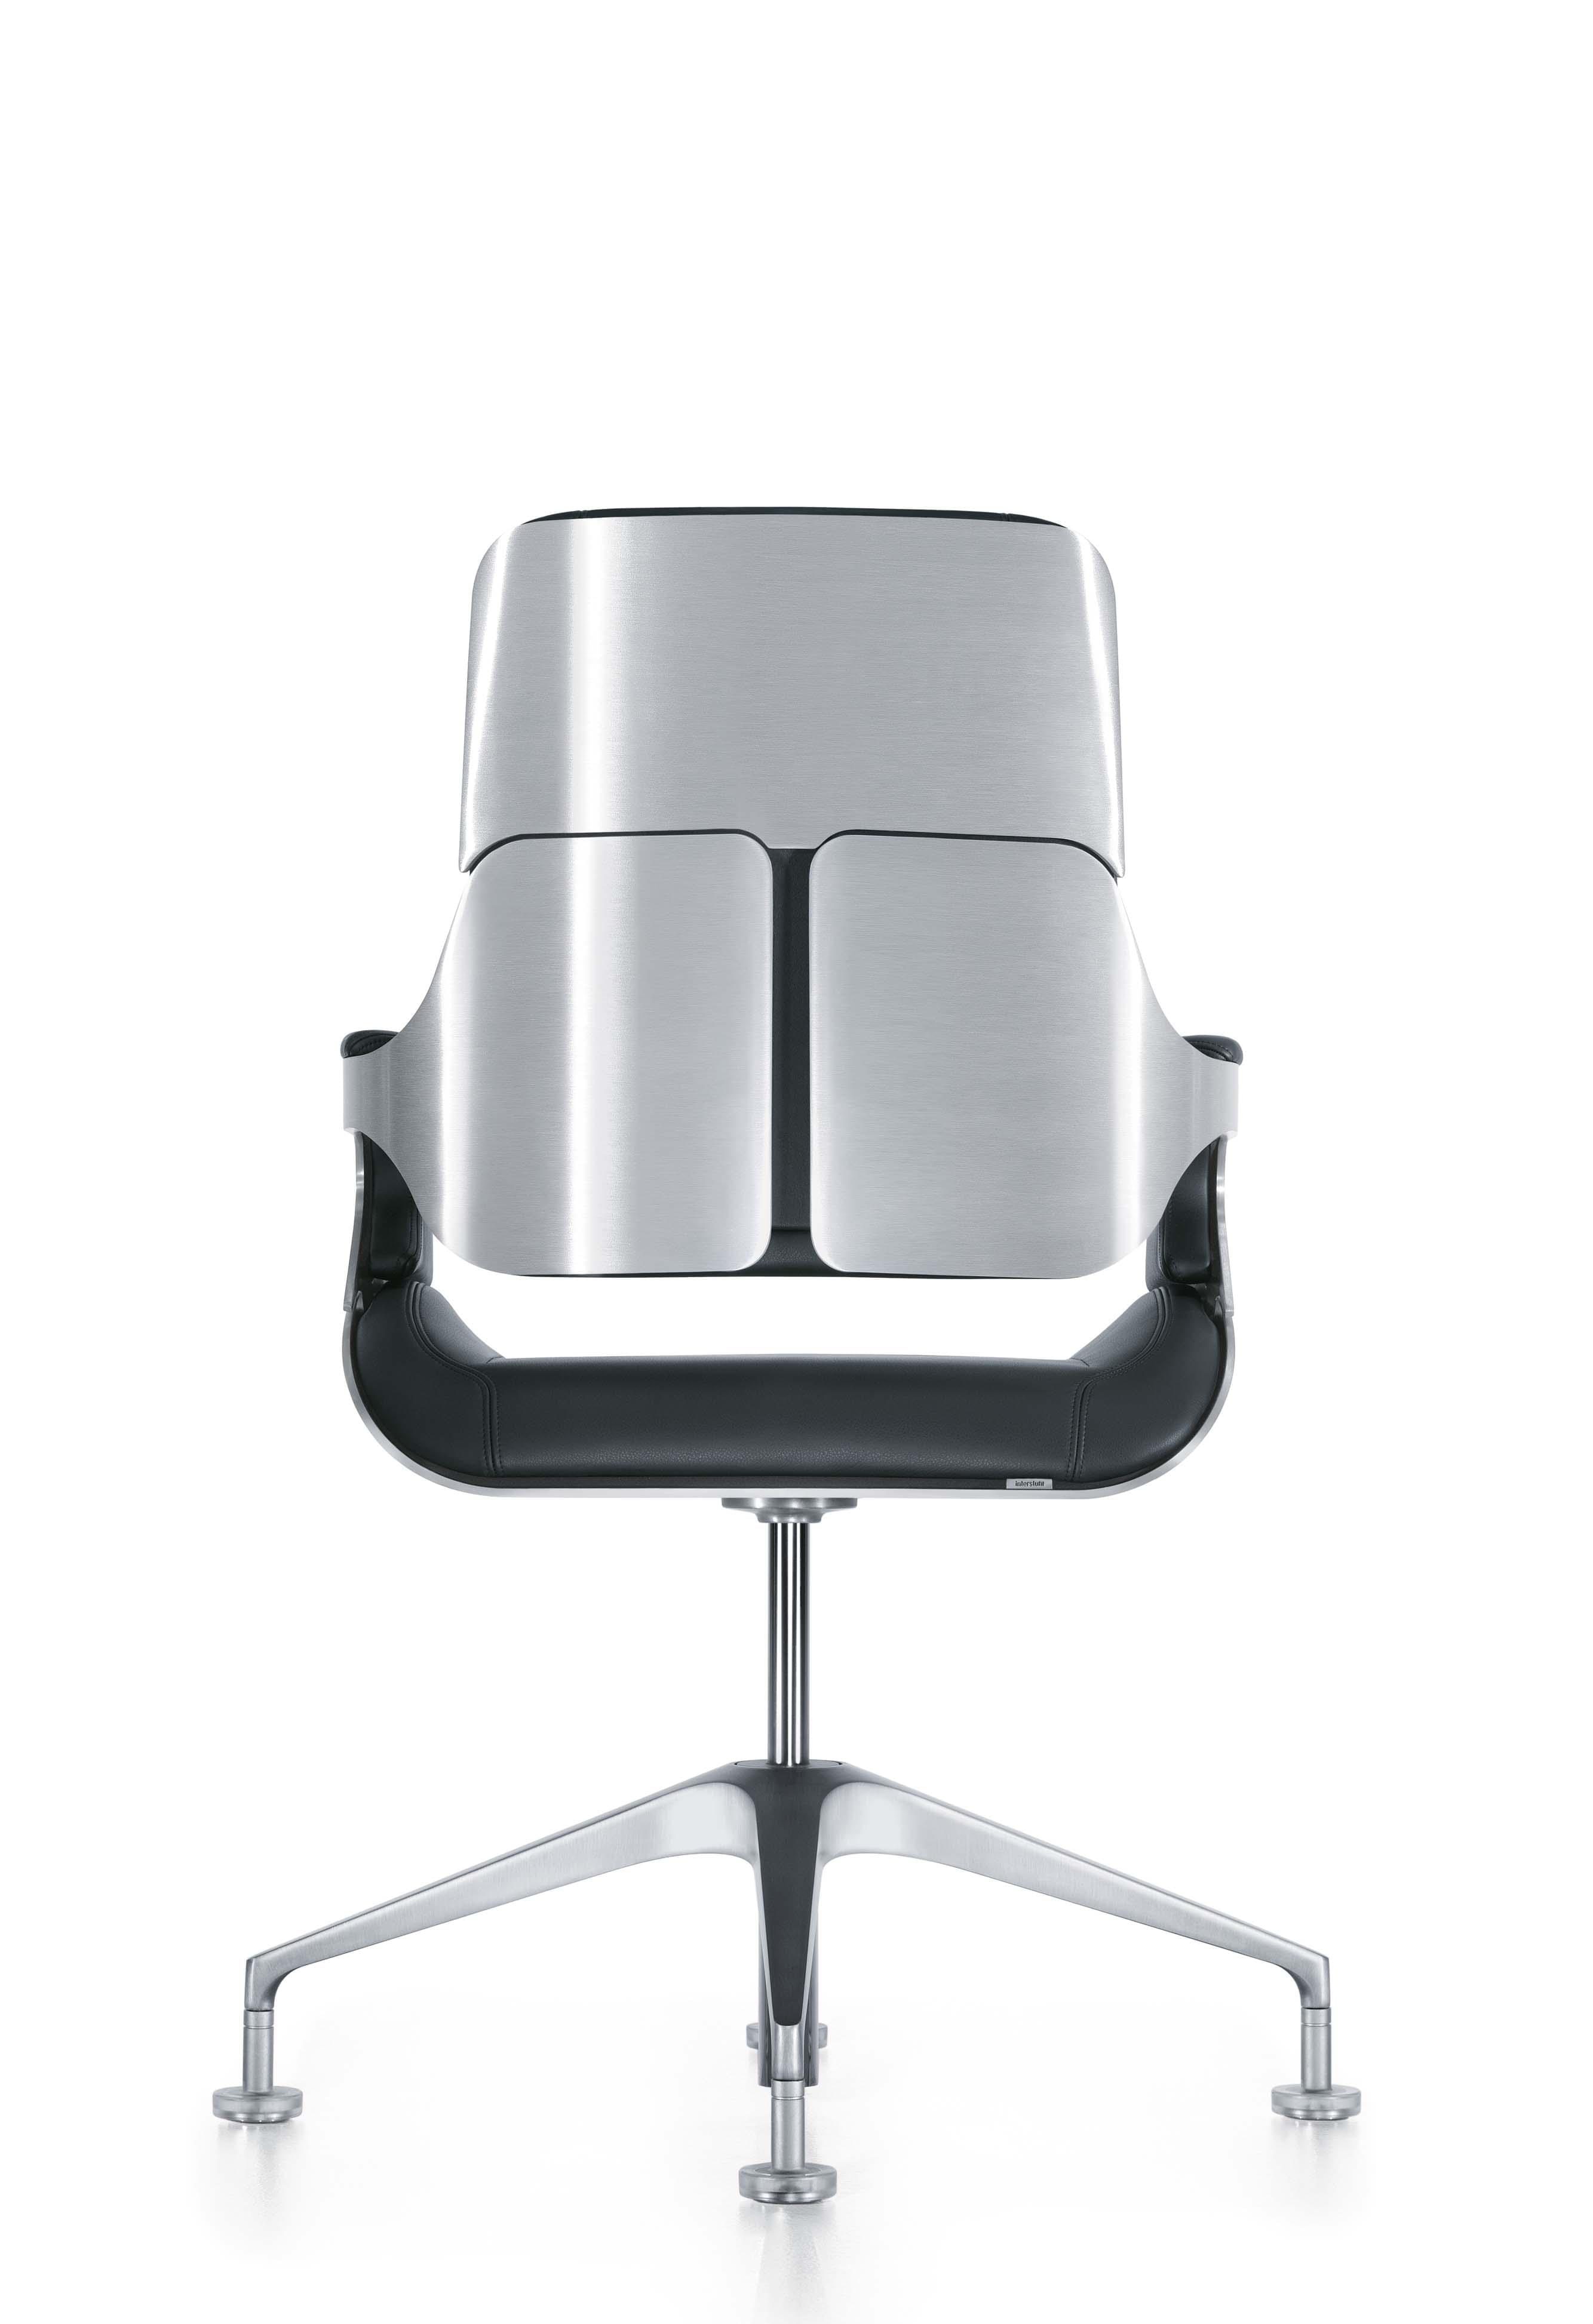 silver intershul desk chair